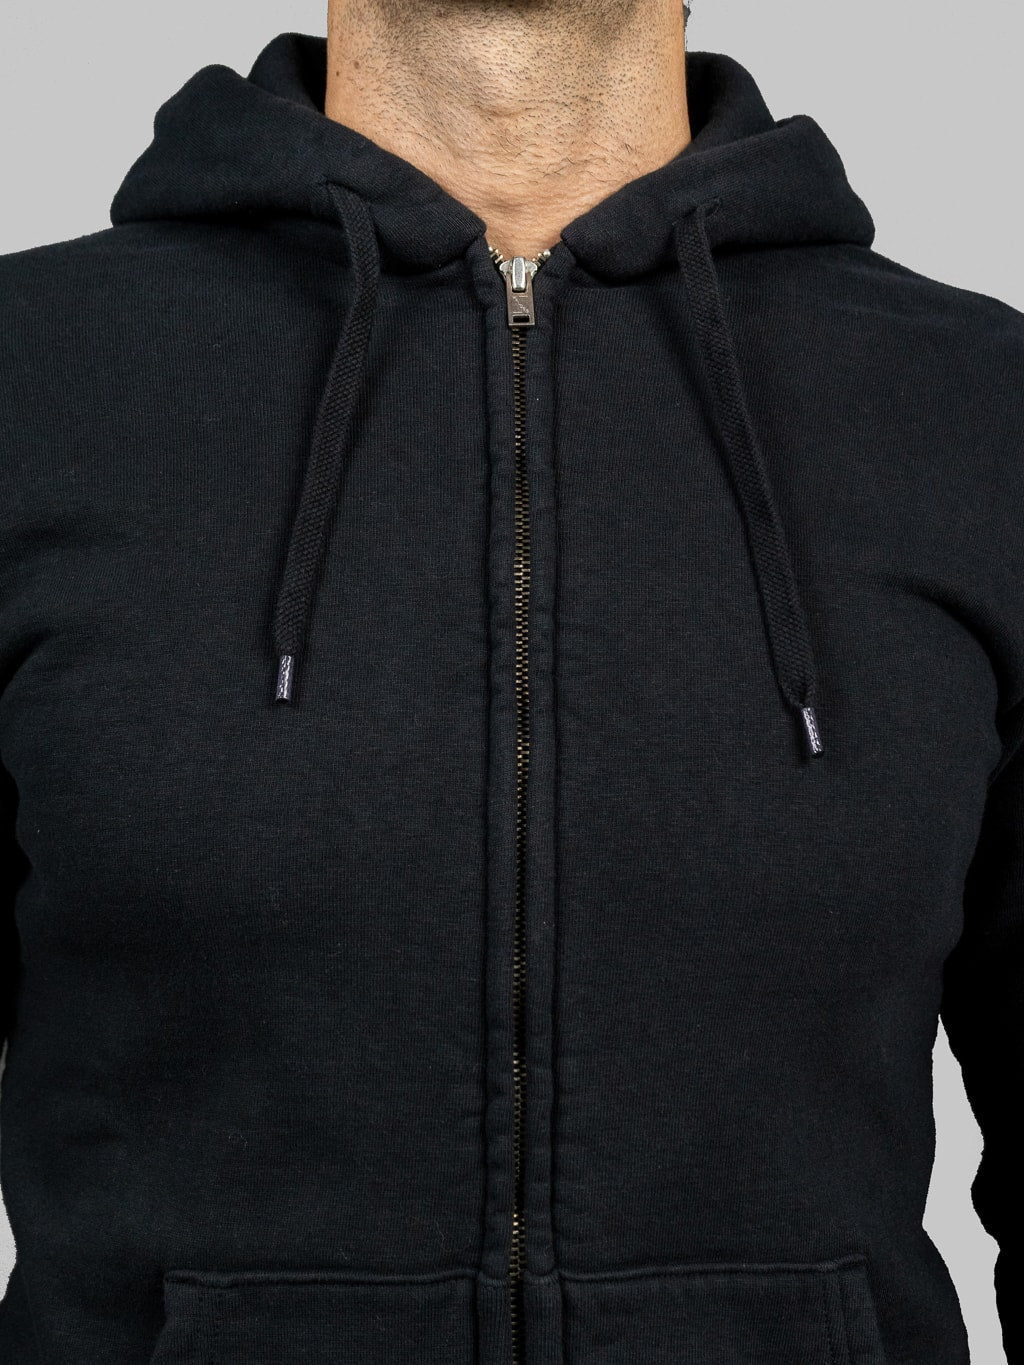 UES hoodie Zip Parka black chest details